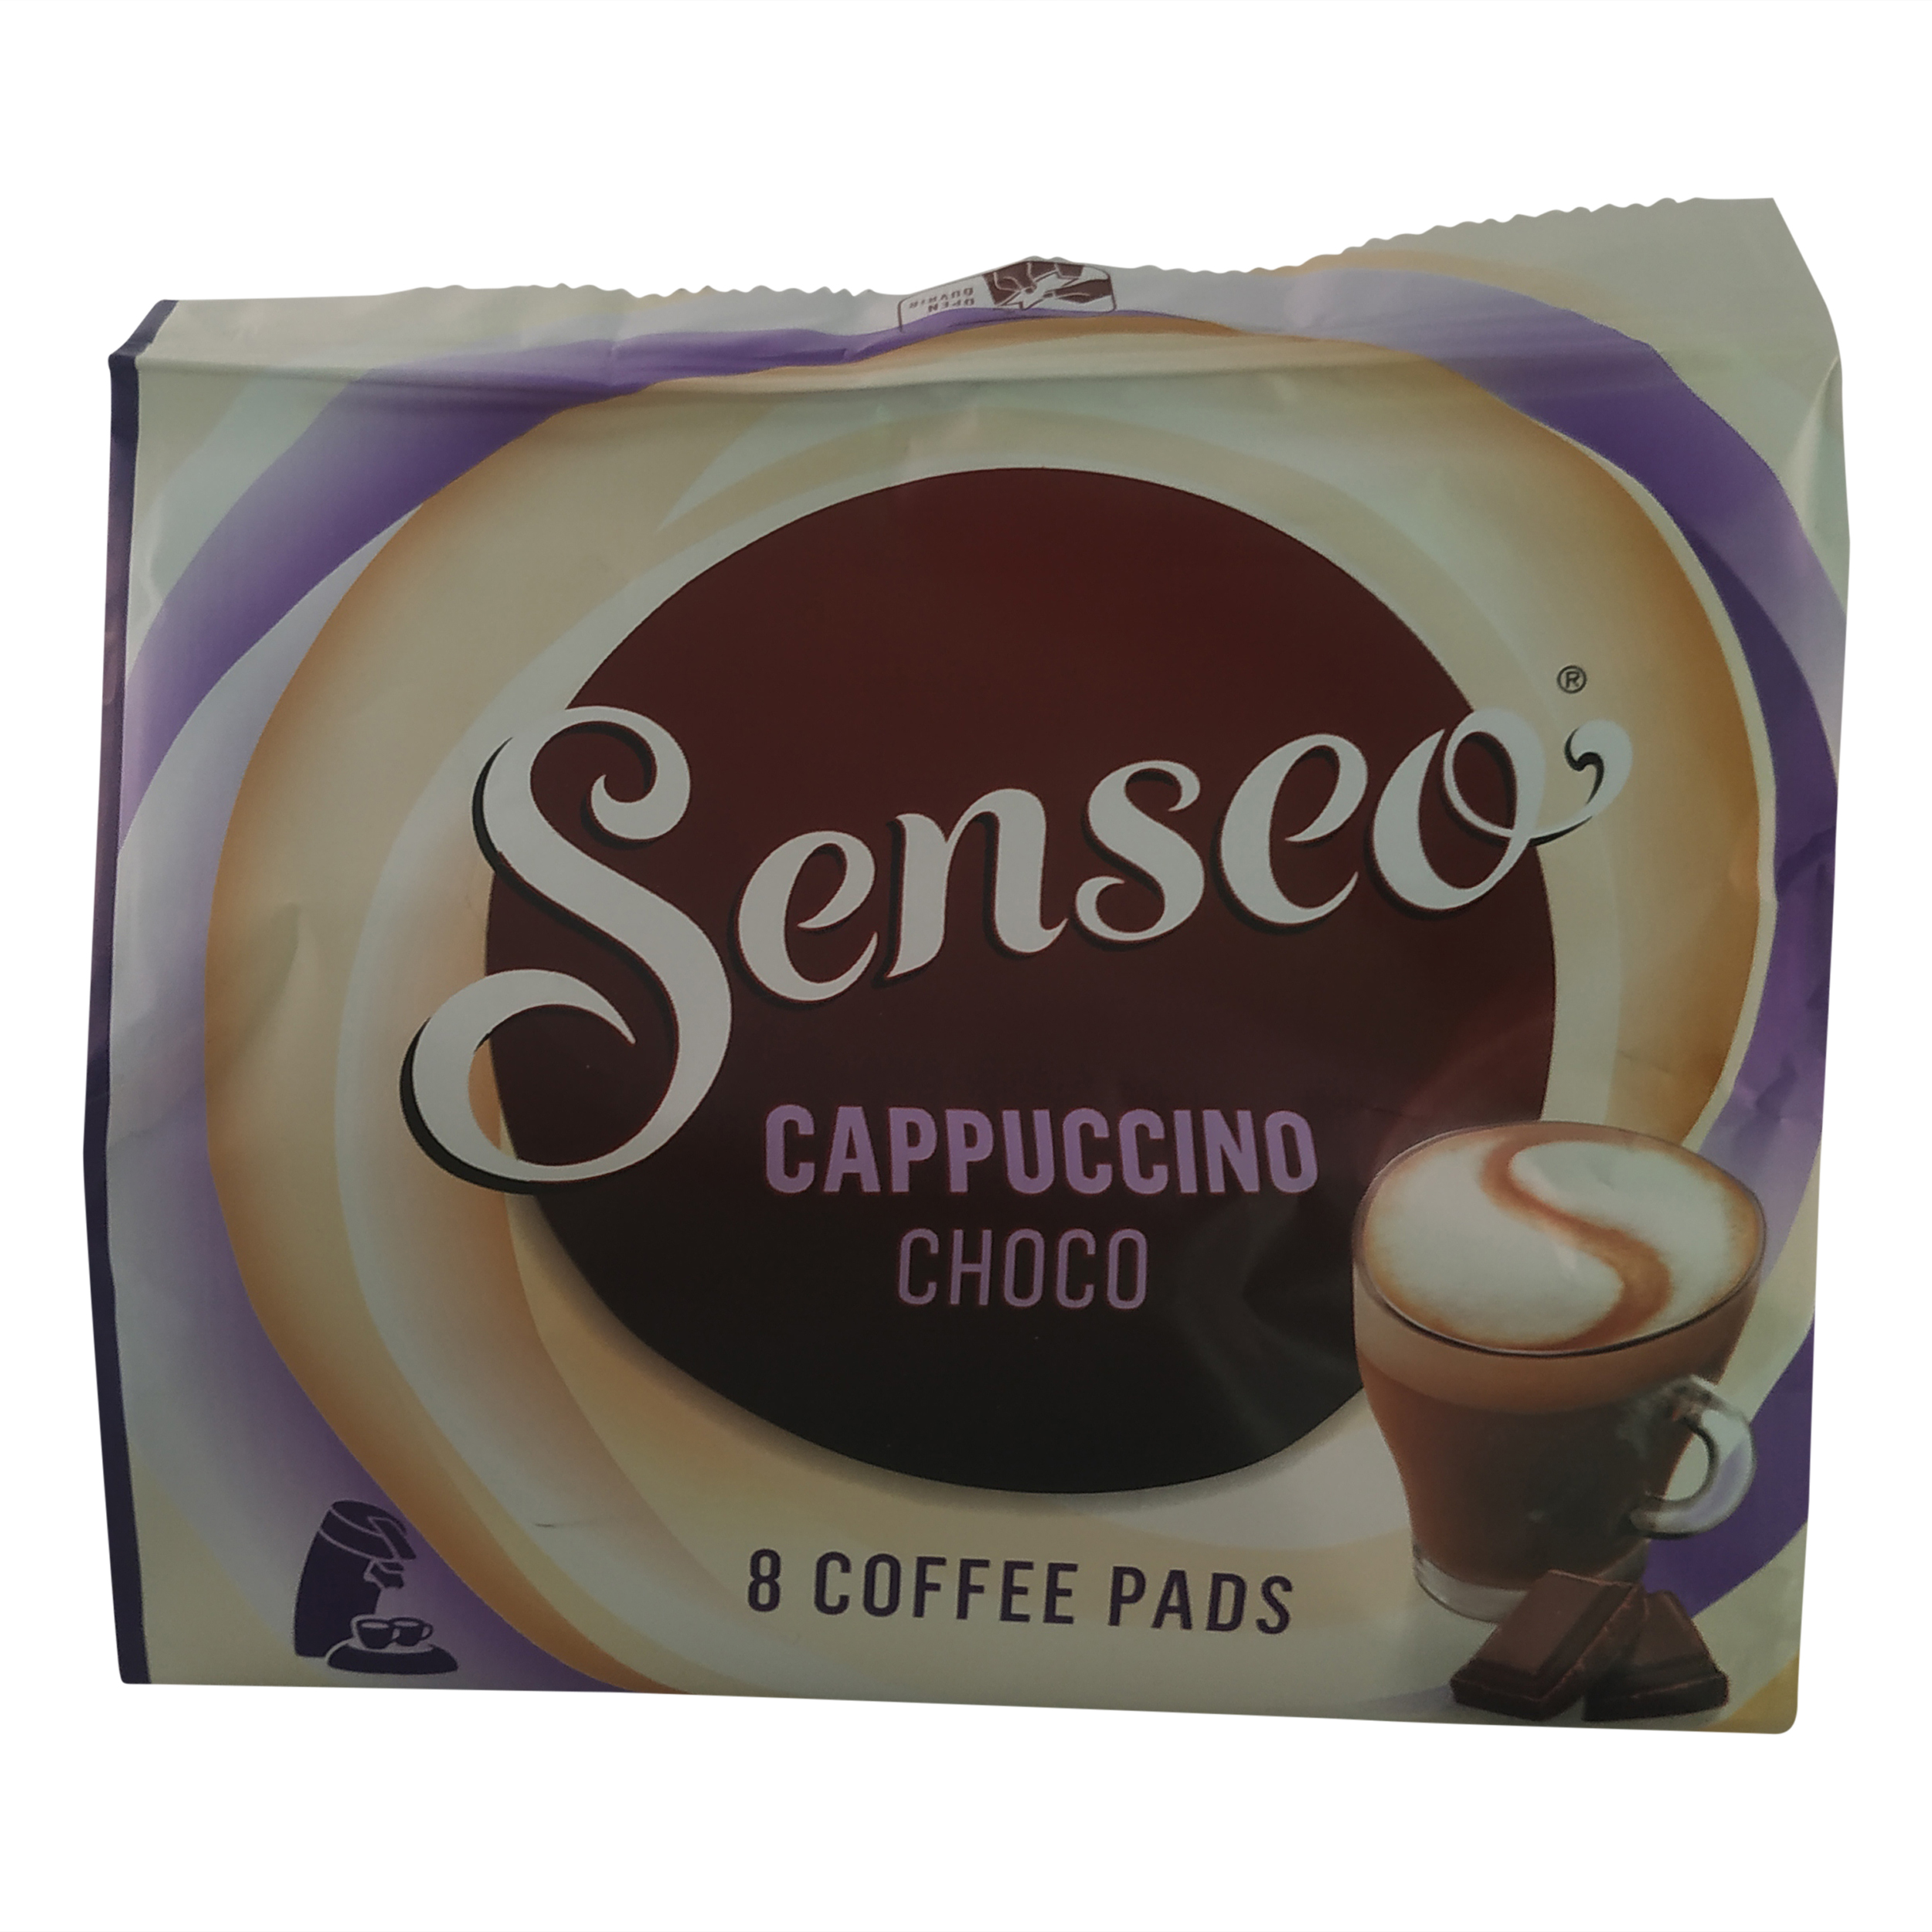 Senseo, Senseo Cappuccino chocolate coffee pods, Cappuccino Choco